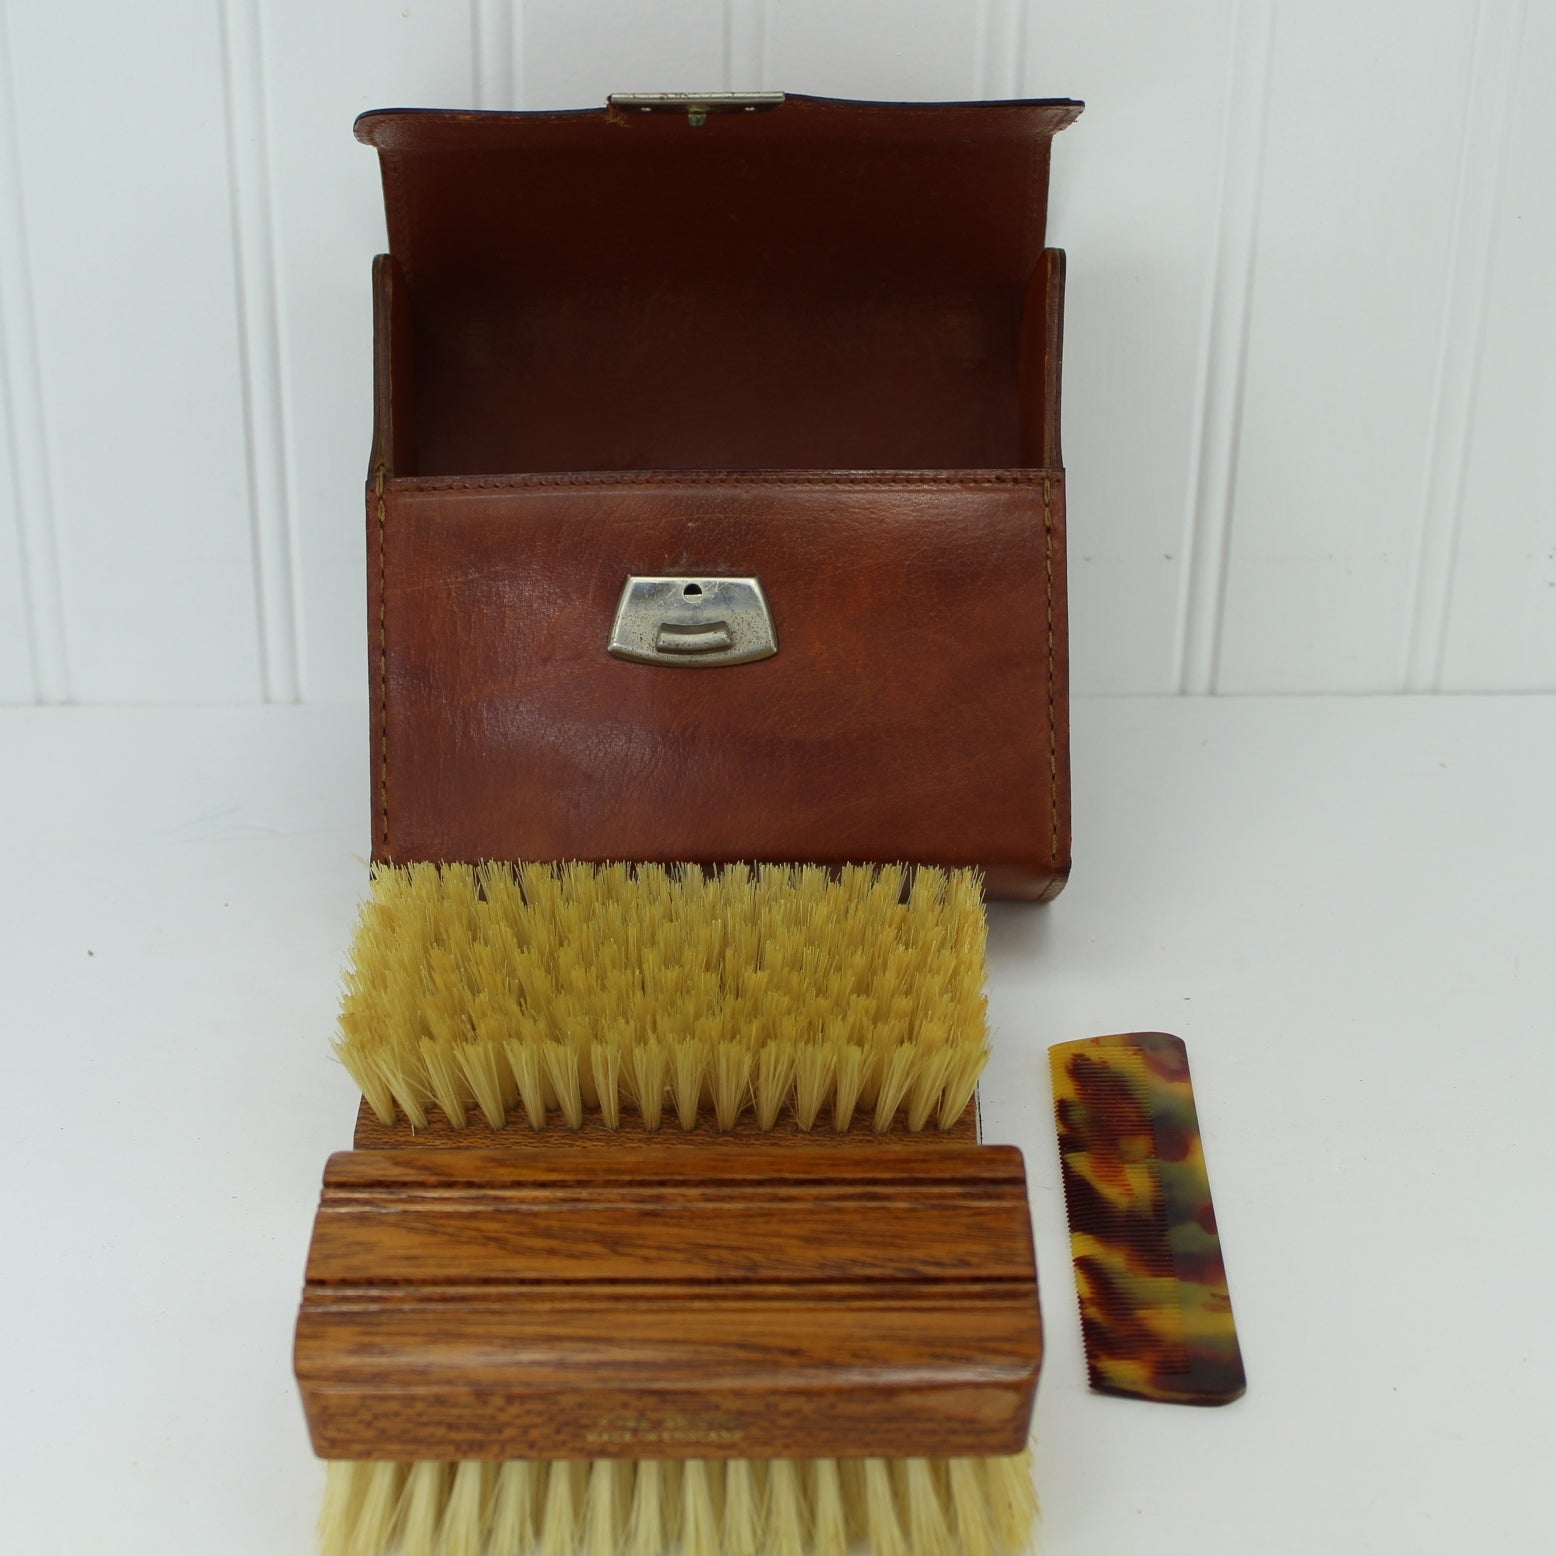 Leather Travel Box England 2 Brushes Tortoise Comb Excellent Gentleman's Treasure